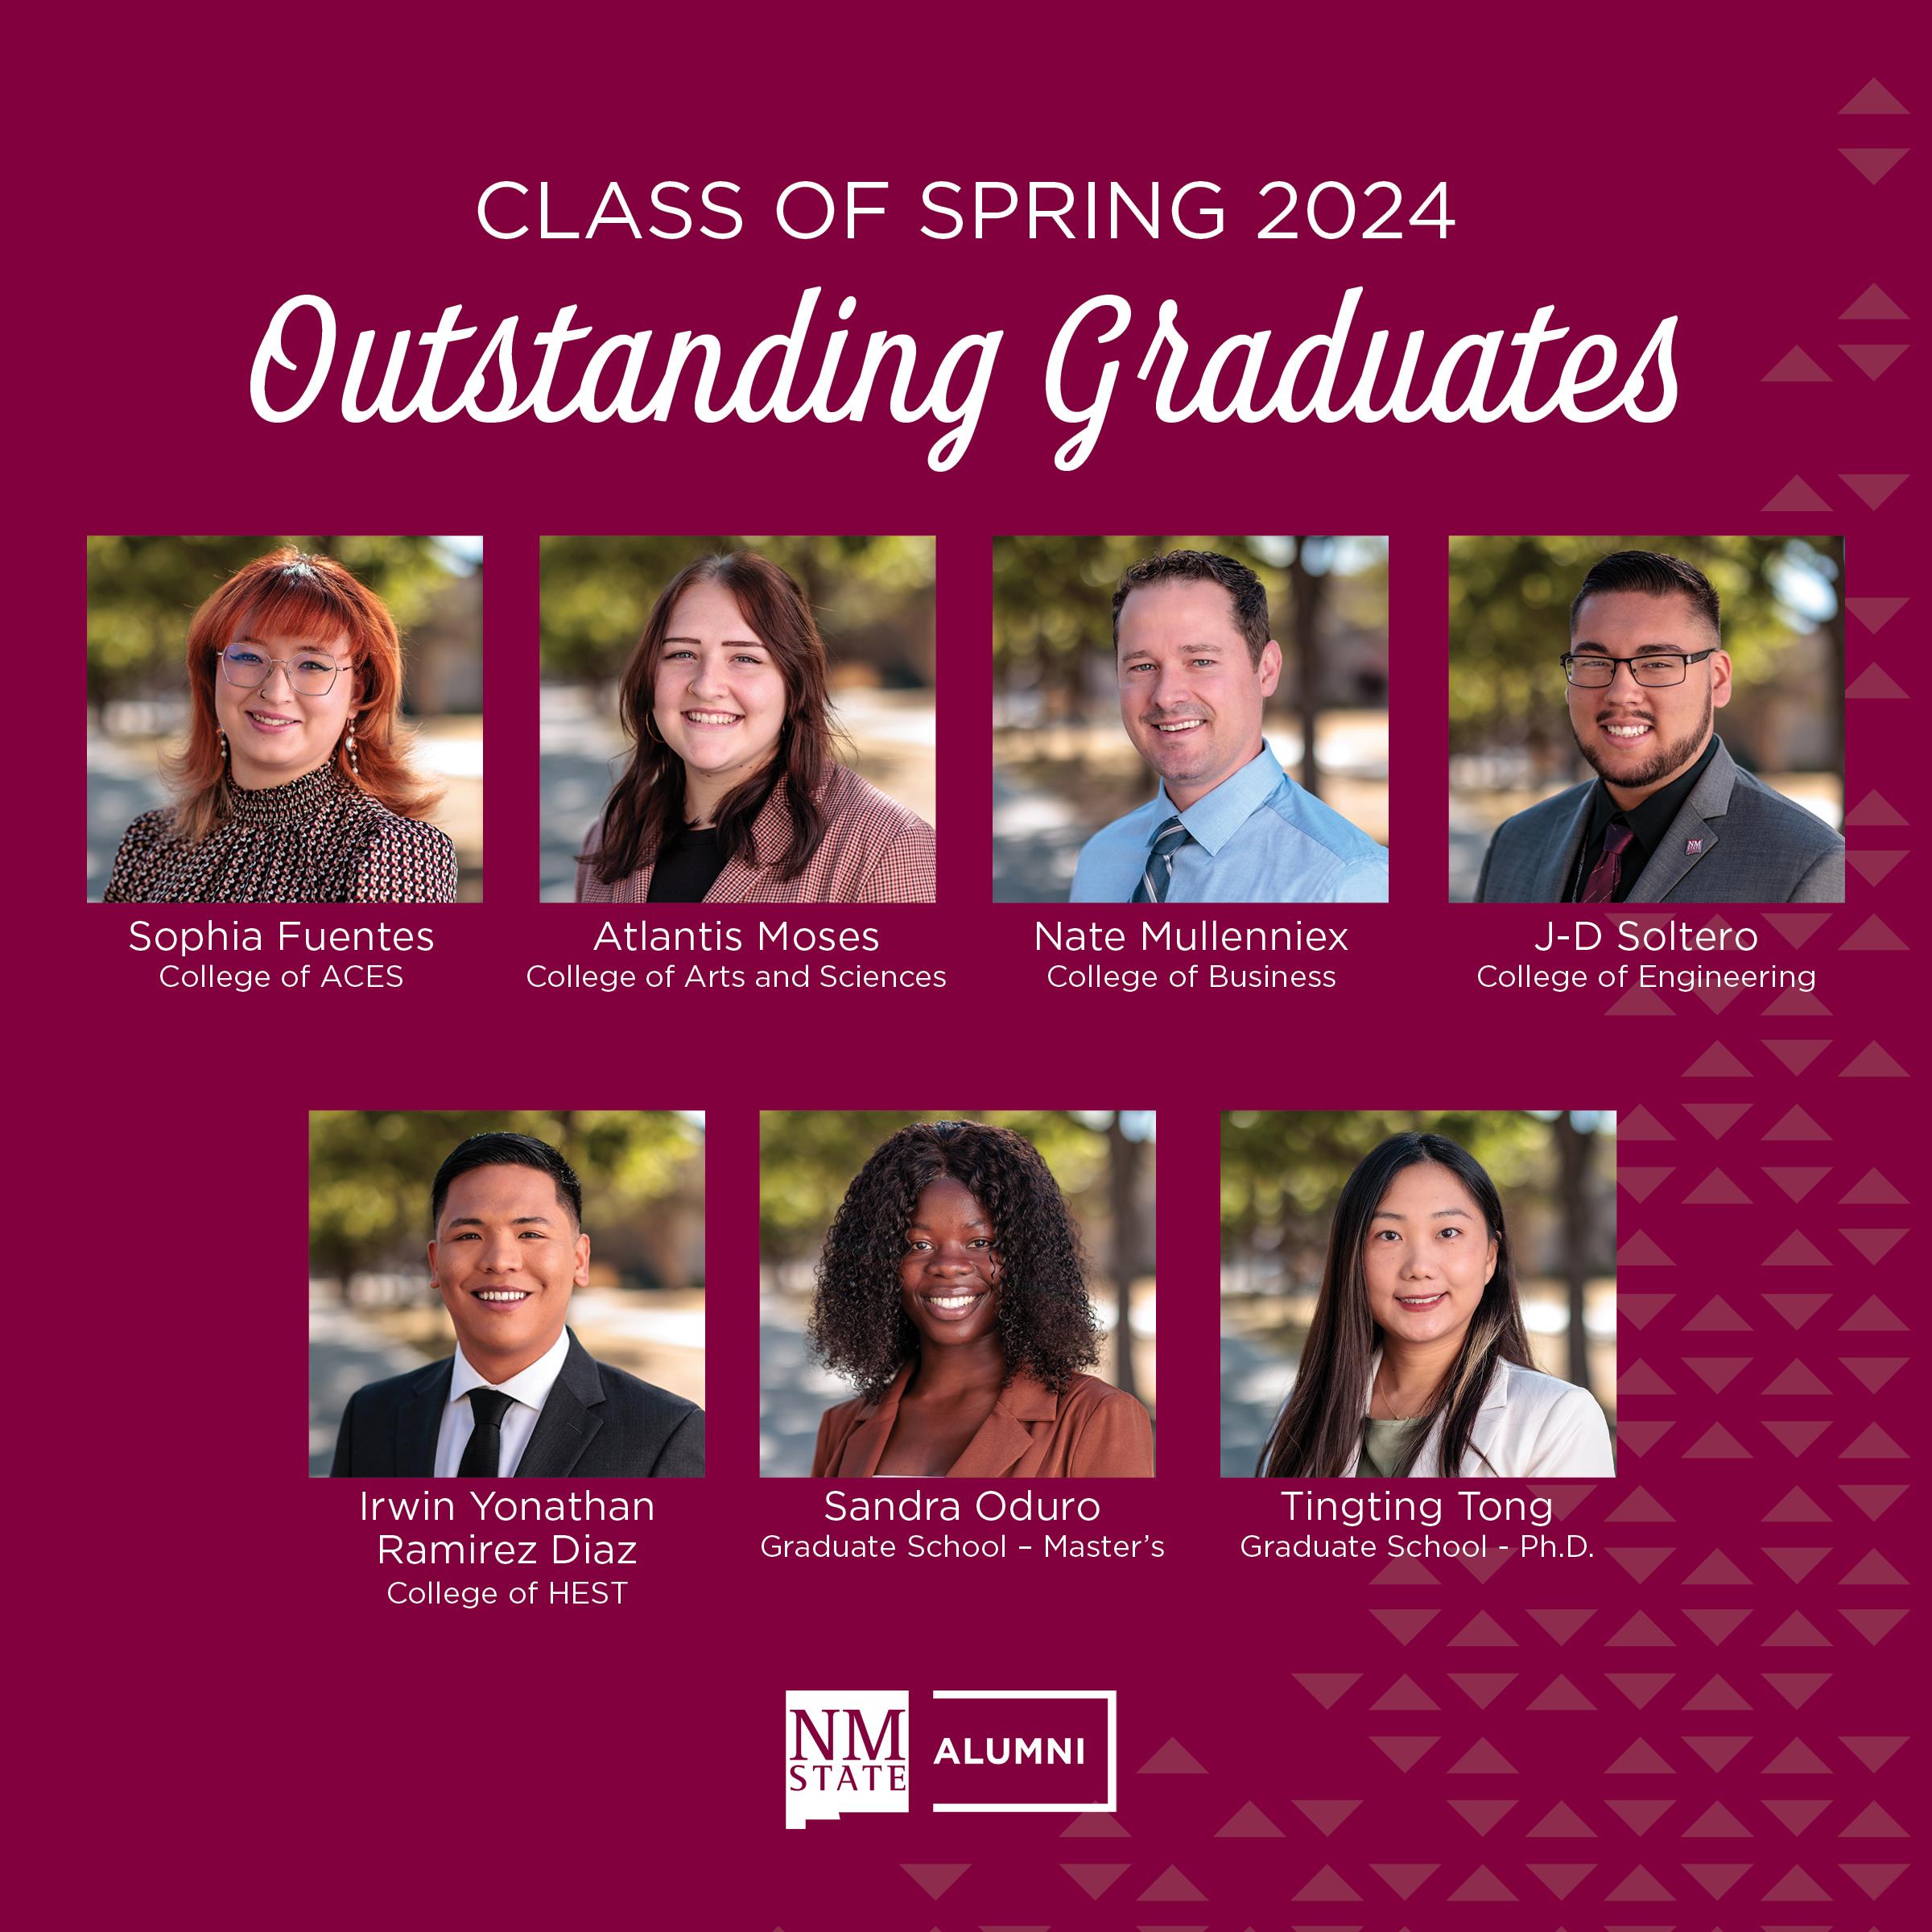 NMSU’s spring 2024 Outstanding Graduate Award recipients exemplify scholarship, service, leadership